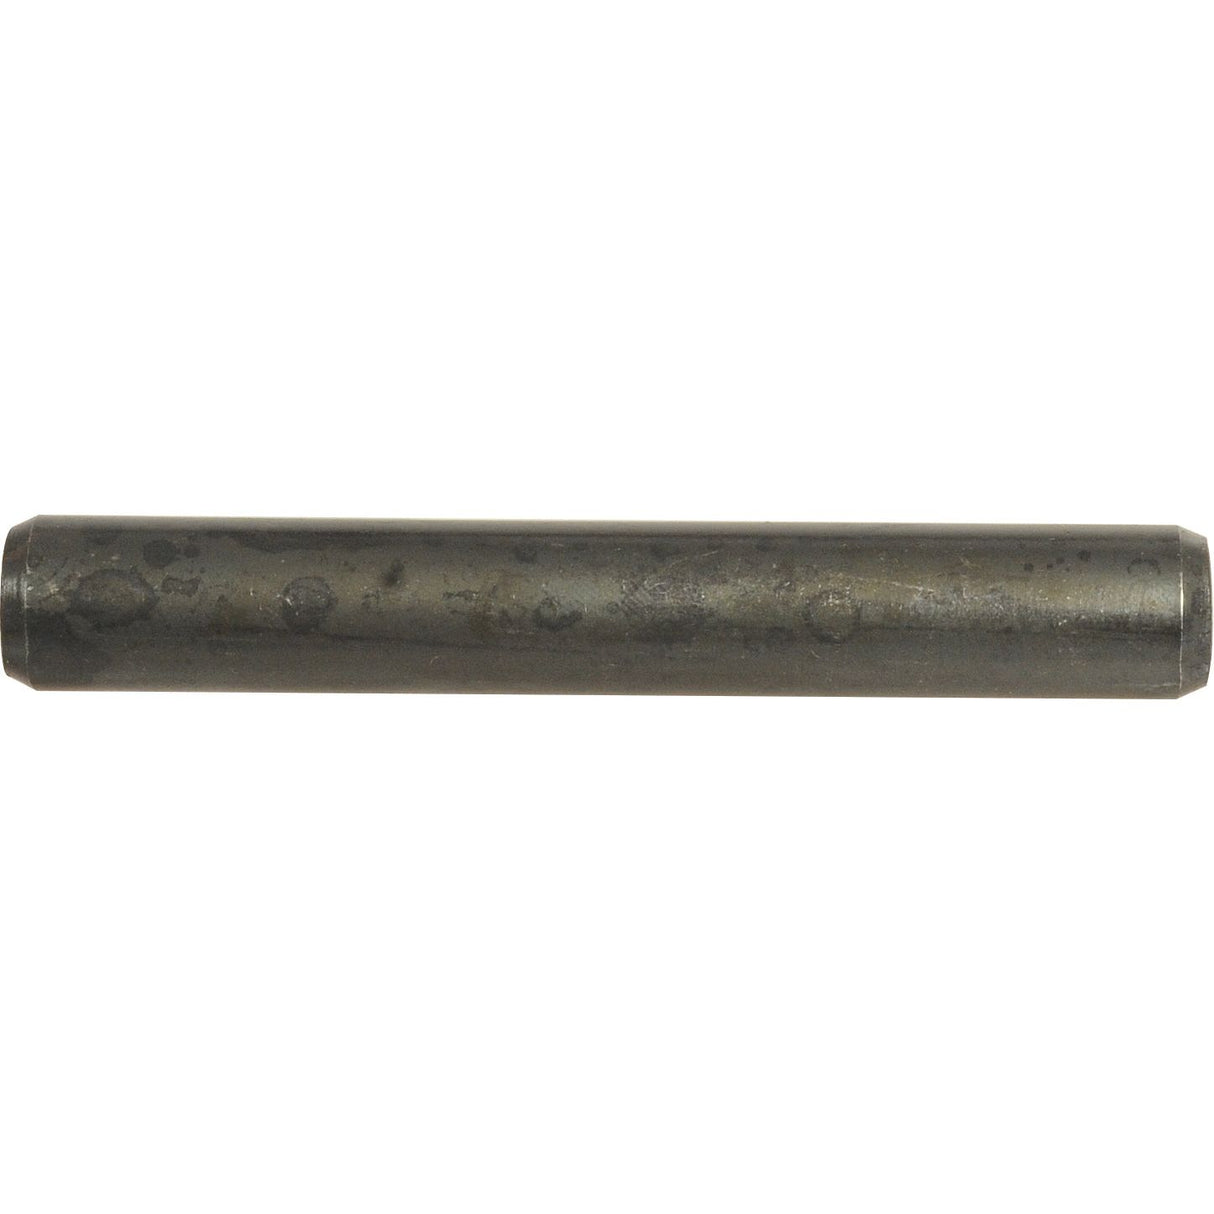 Metric Roll Pin, Pin⌀13mm x 50mm
 - S.11483 - Farming Parts